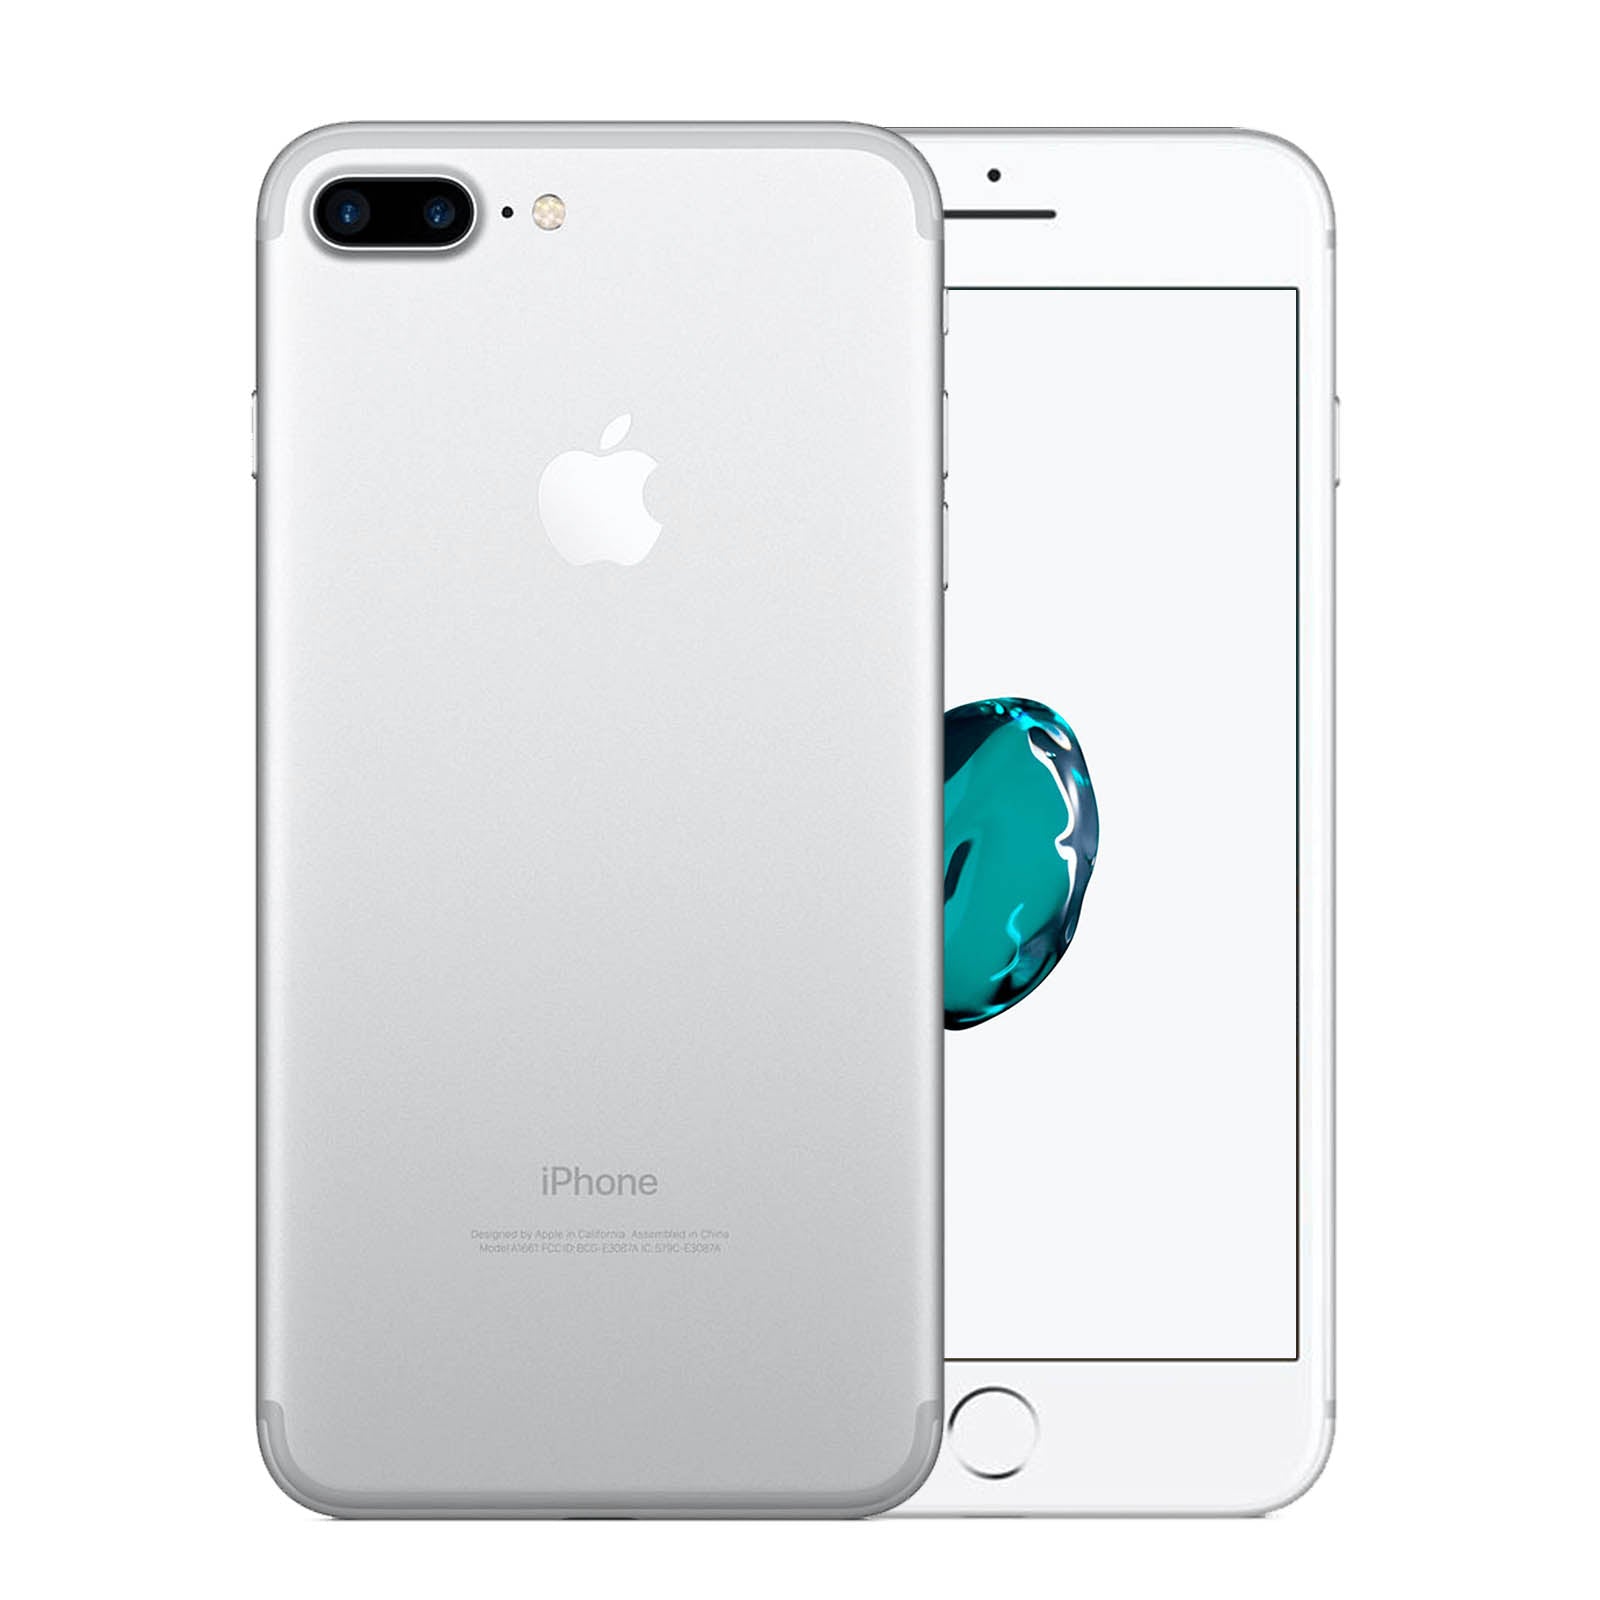 Apple iPhone 7 Plus 128GB Silver Very Good - Unlocked